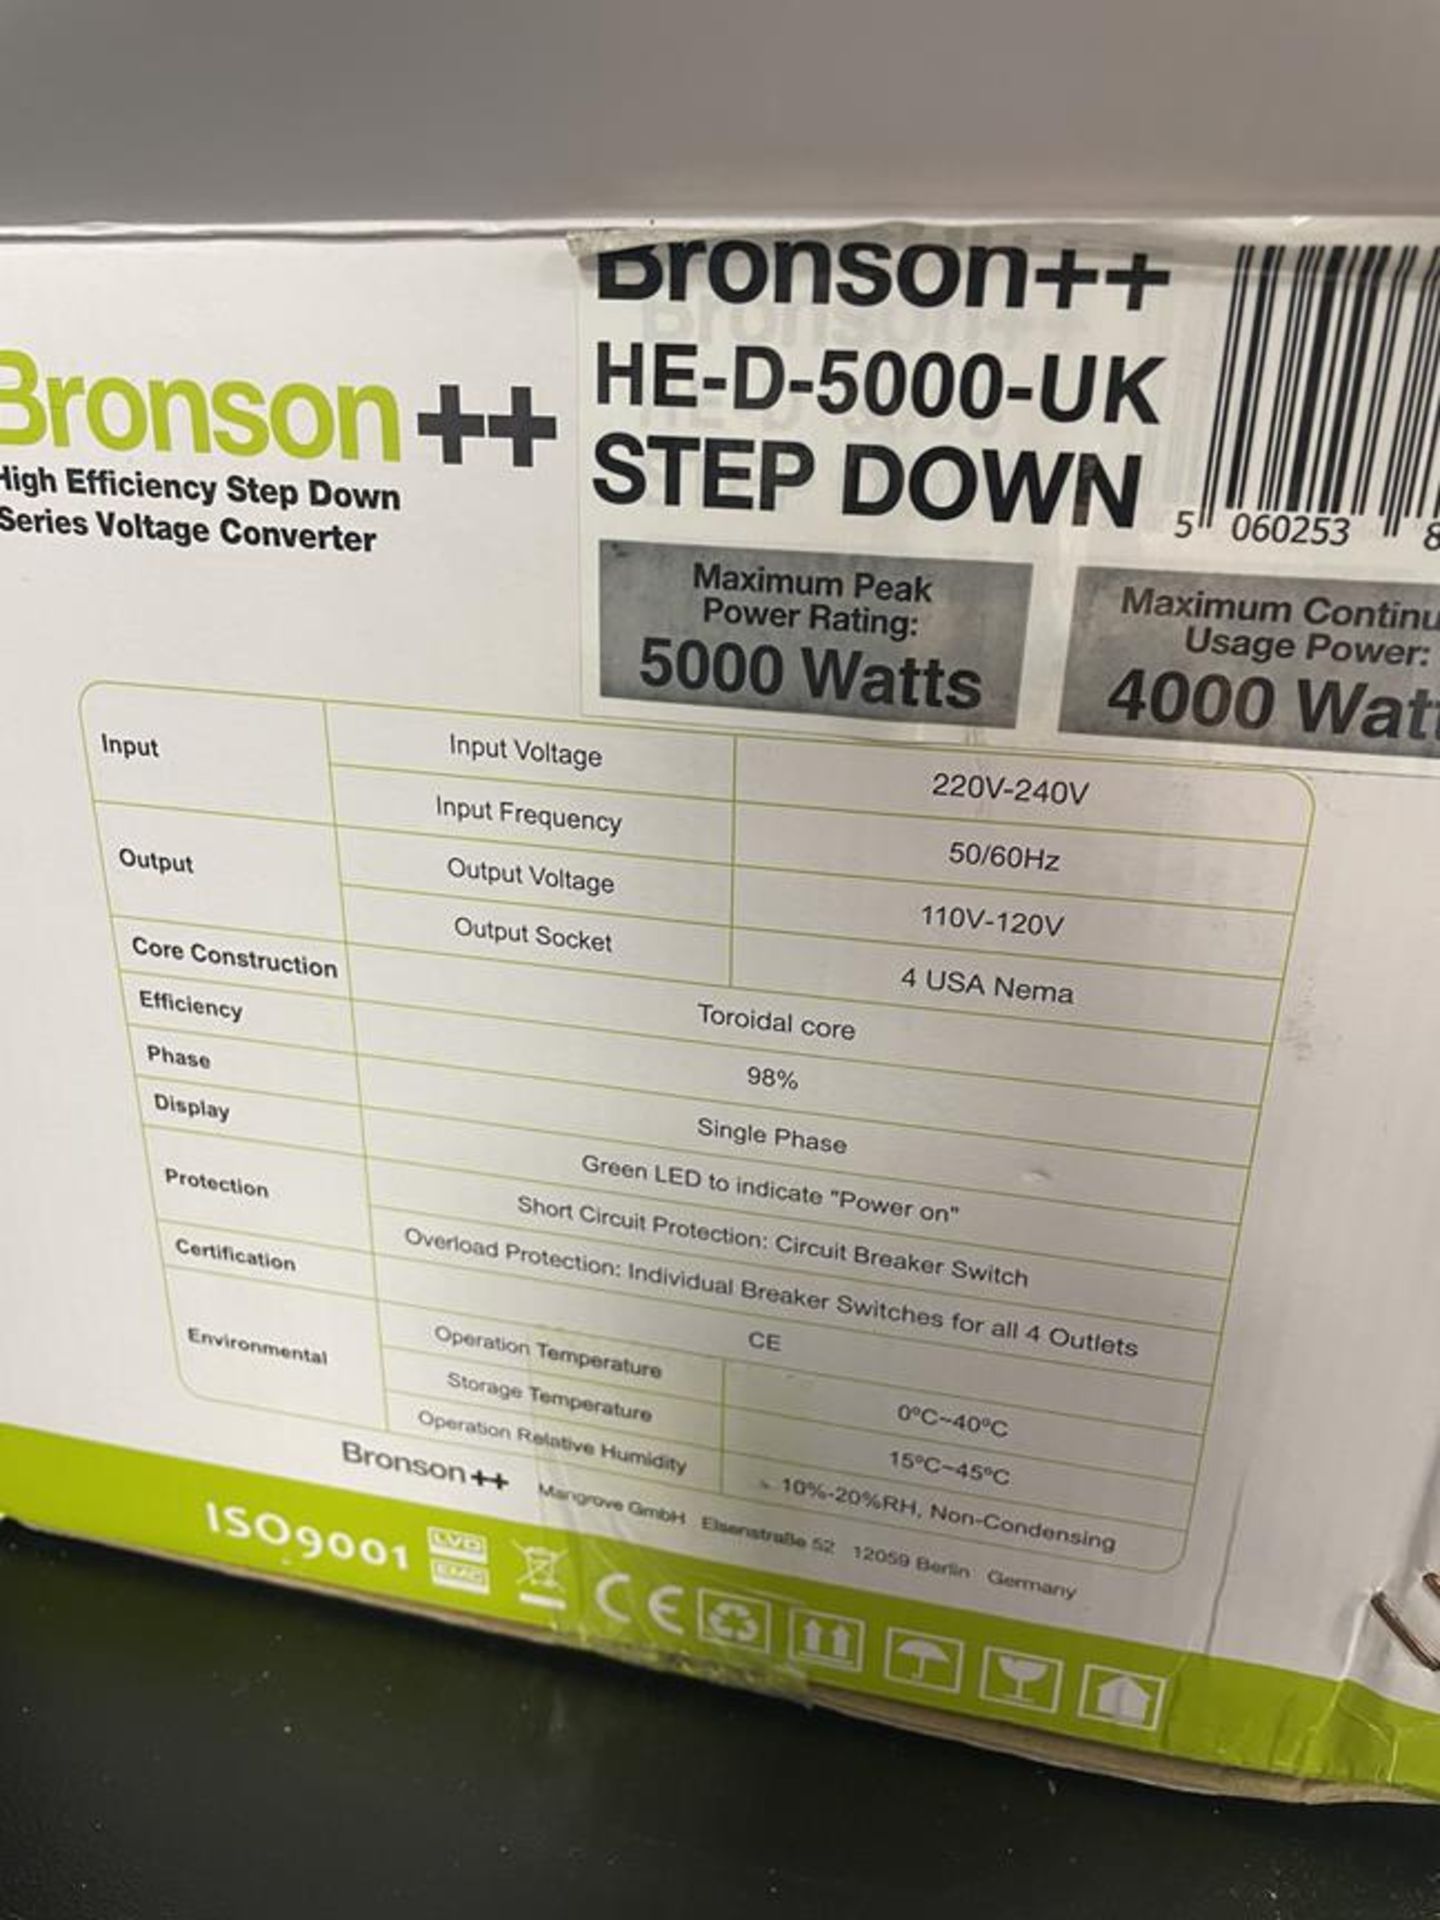 Bronson++ Step Down Series Voltage Converter, Max 5000W (GB REF#73) - Image 2 of 3